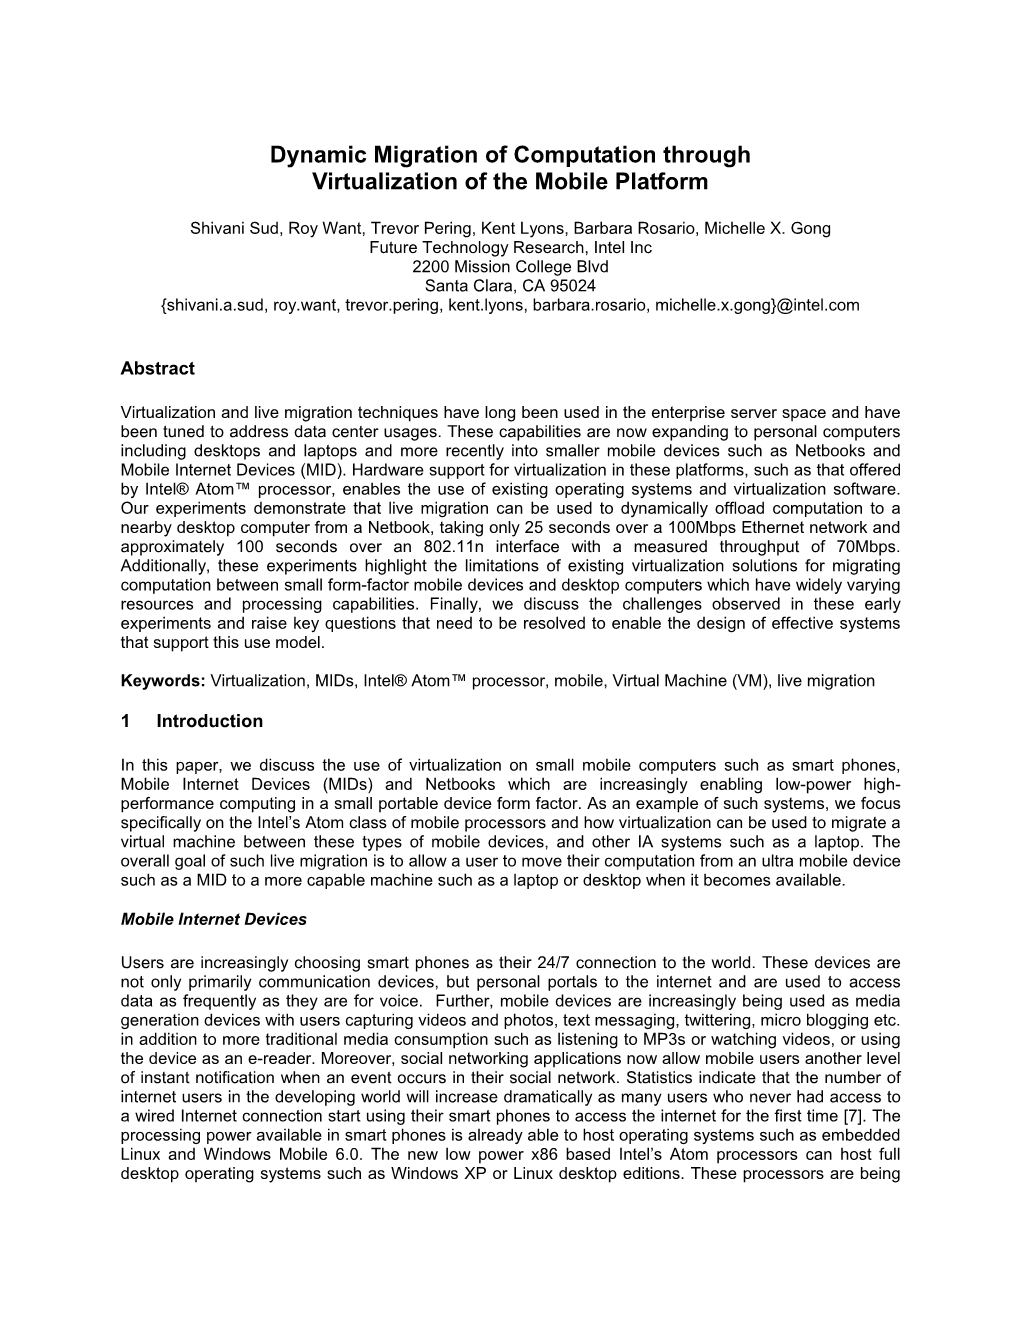 Dynamic Migration of Computation Through Virtualization of the Mobile Platform